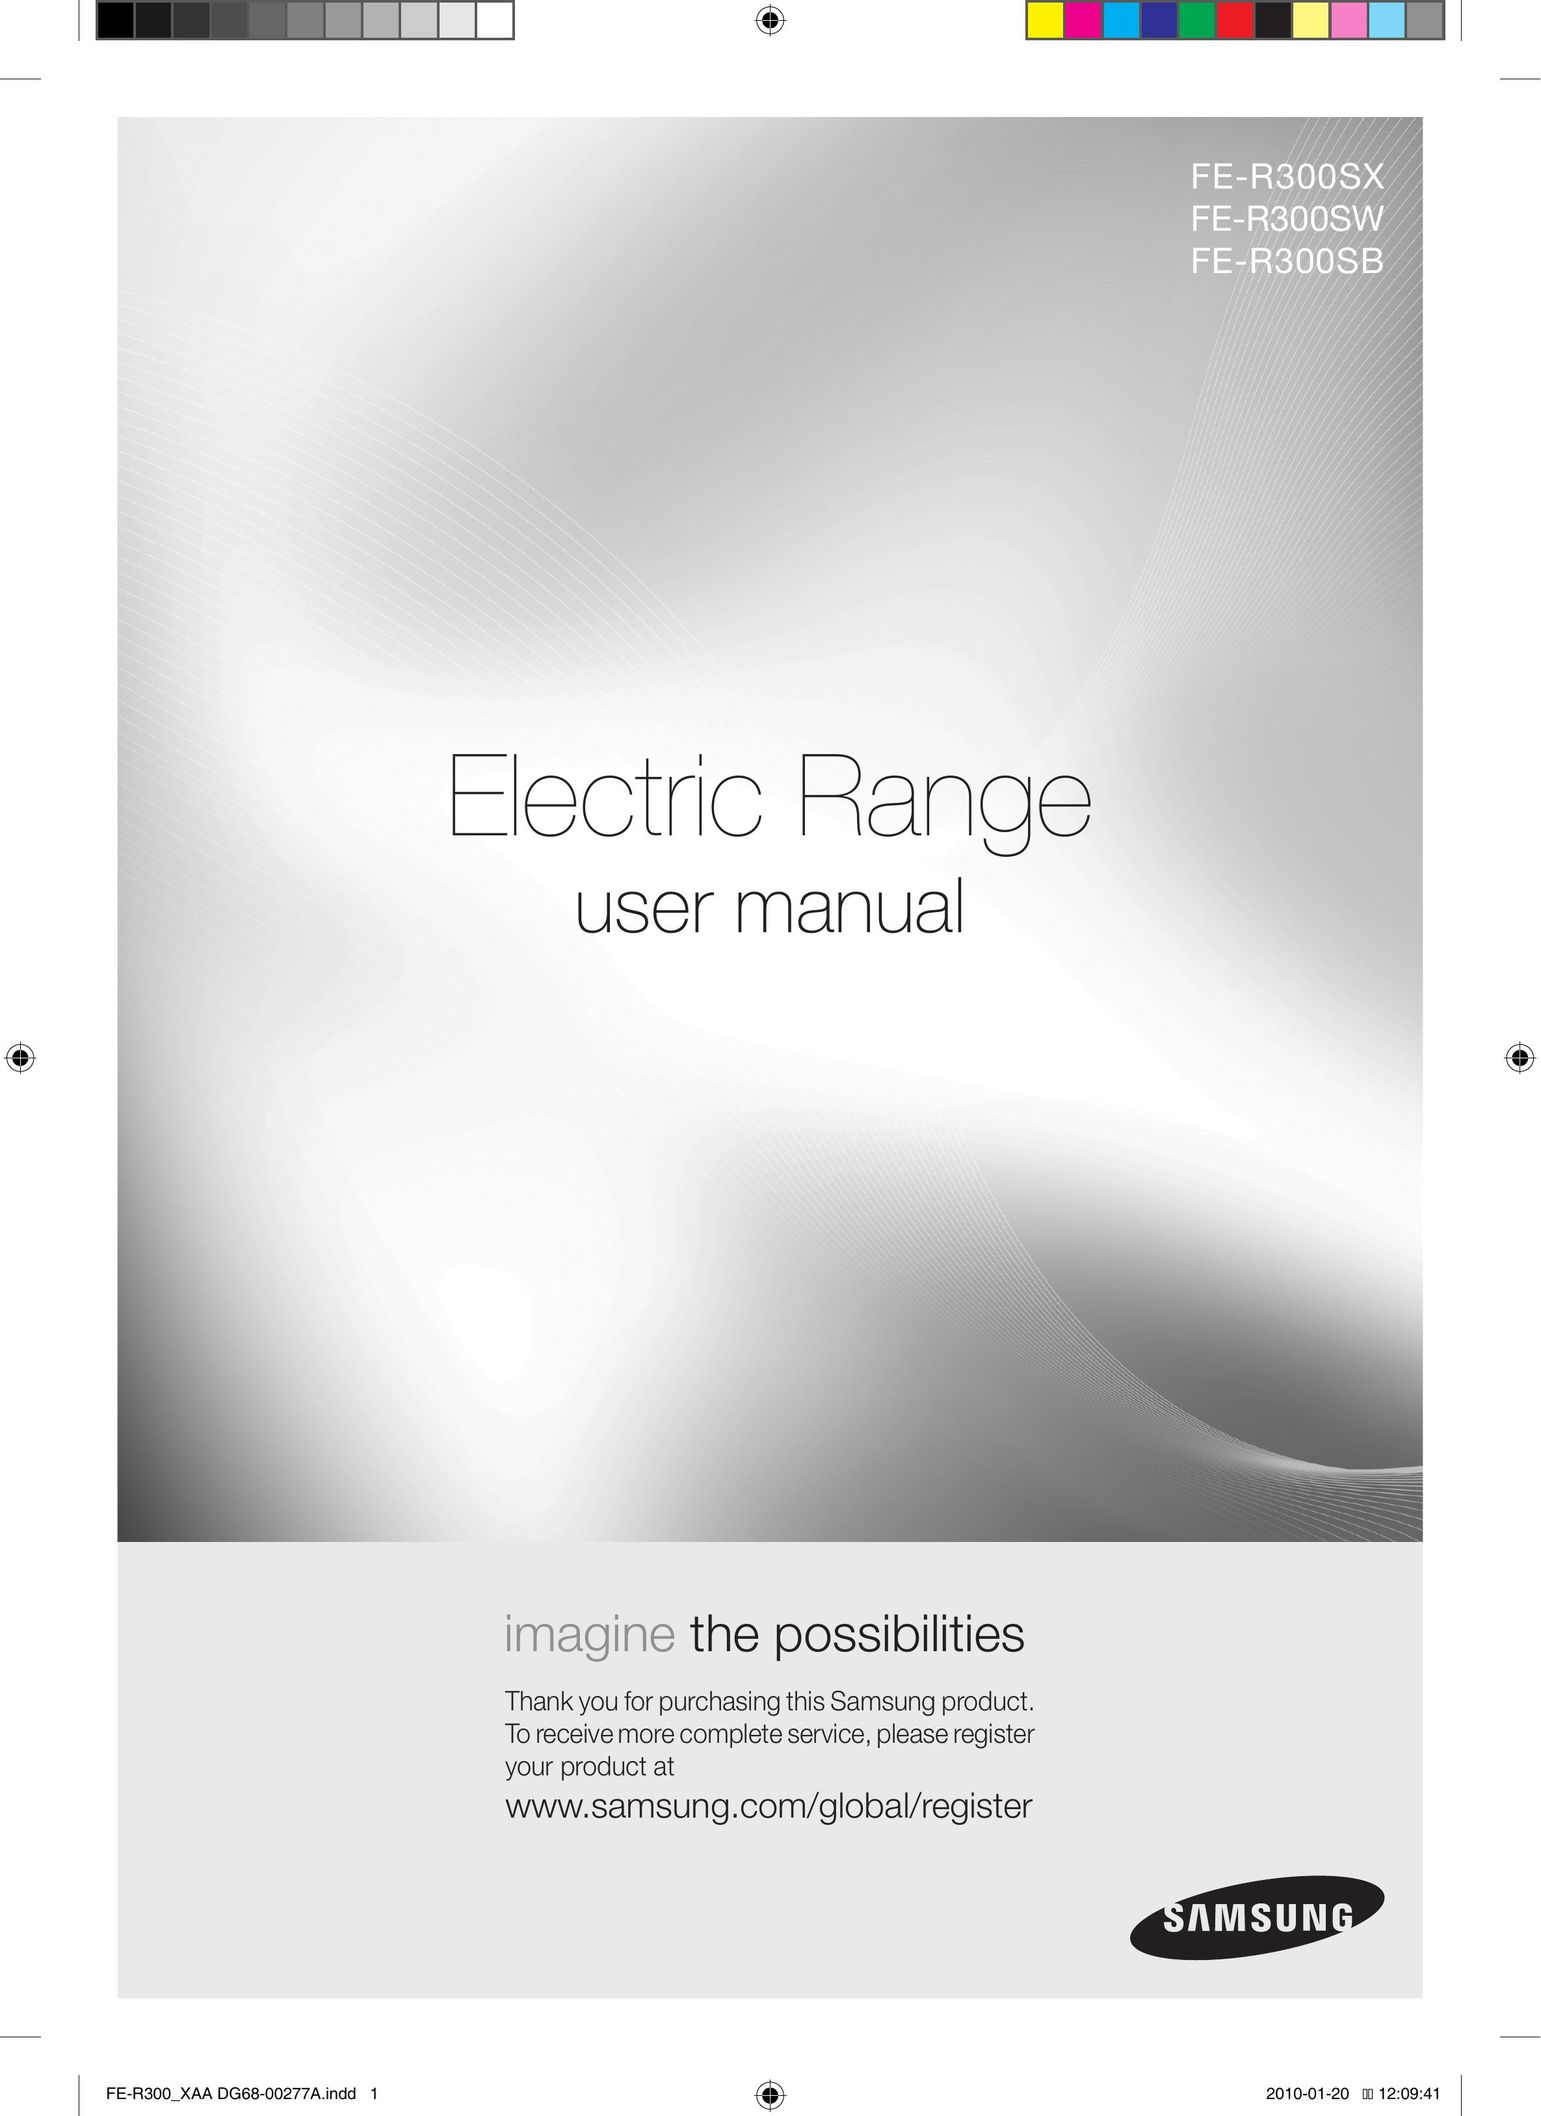 Samsung FE-R300SW Range User Manual